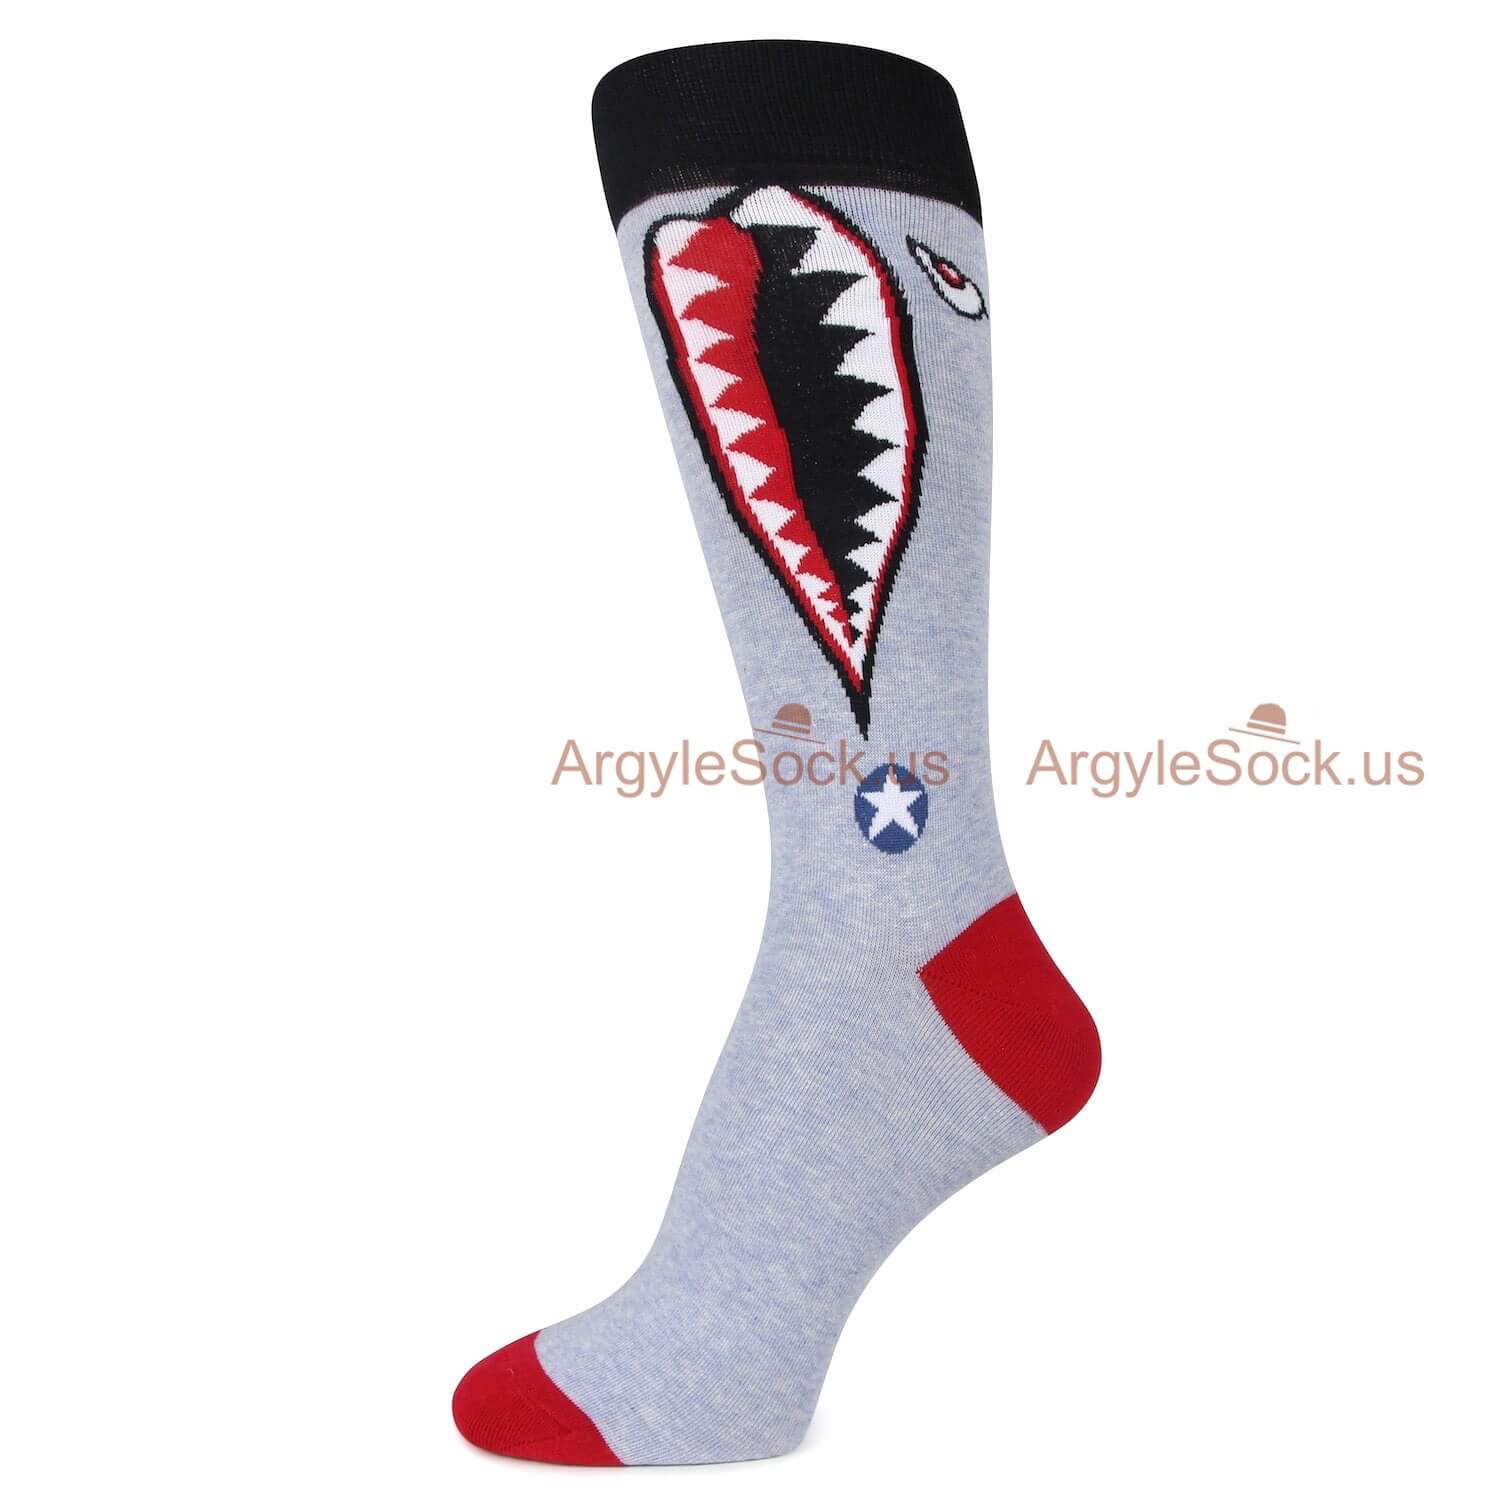 Shark Themed Socks With Gray and Red Mens Socks